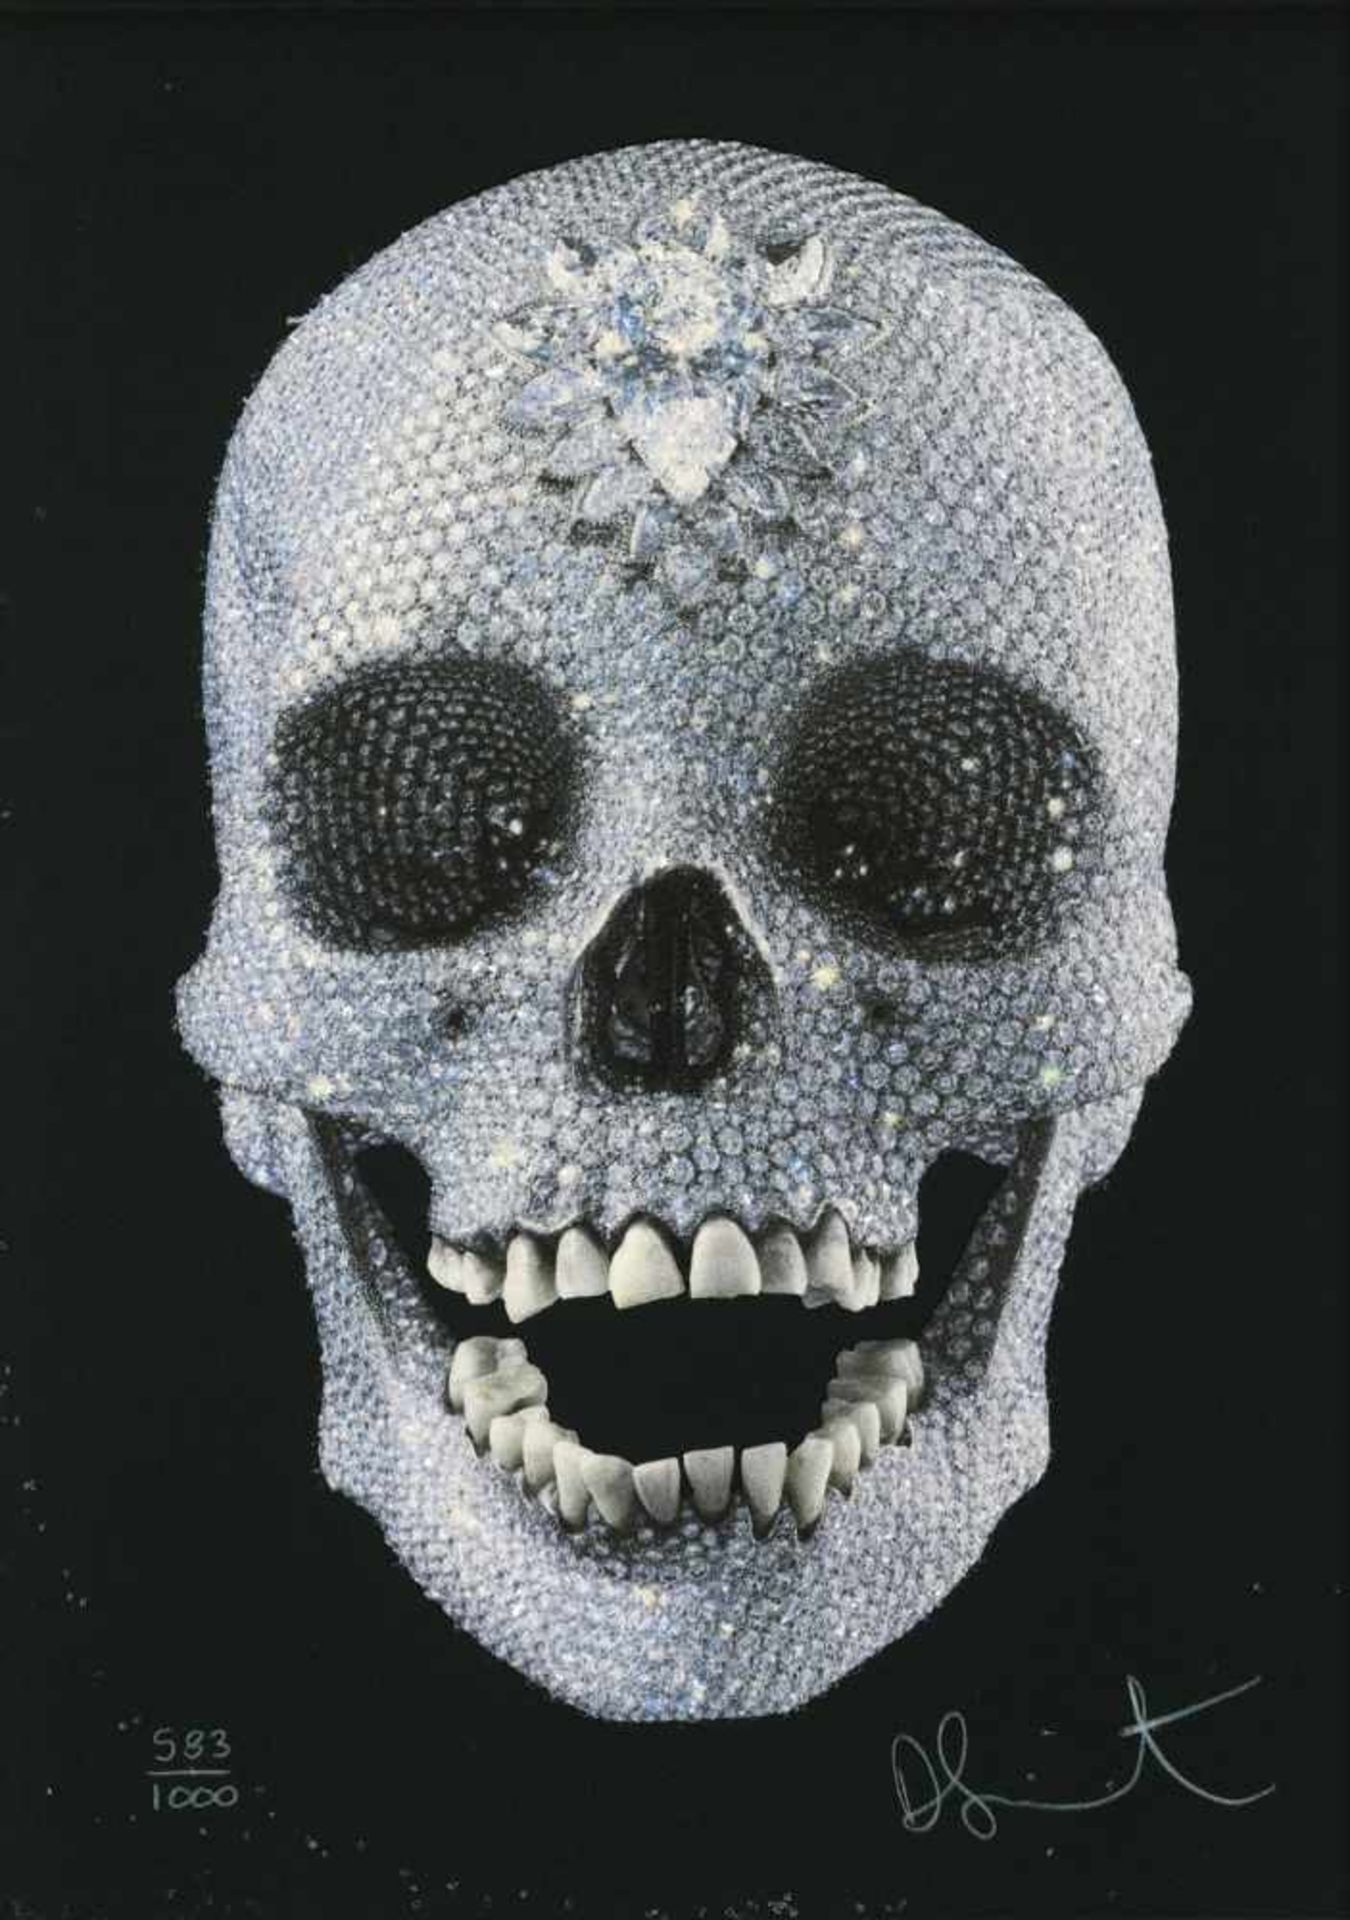 Hirst, Damien: Skull - For the Love of GodSkull - For the Love of GodFarbserigraphie und